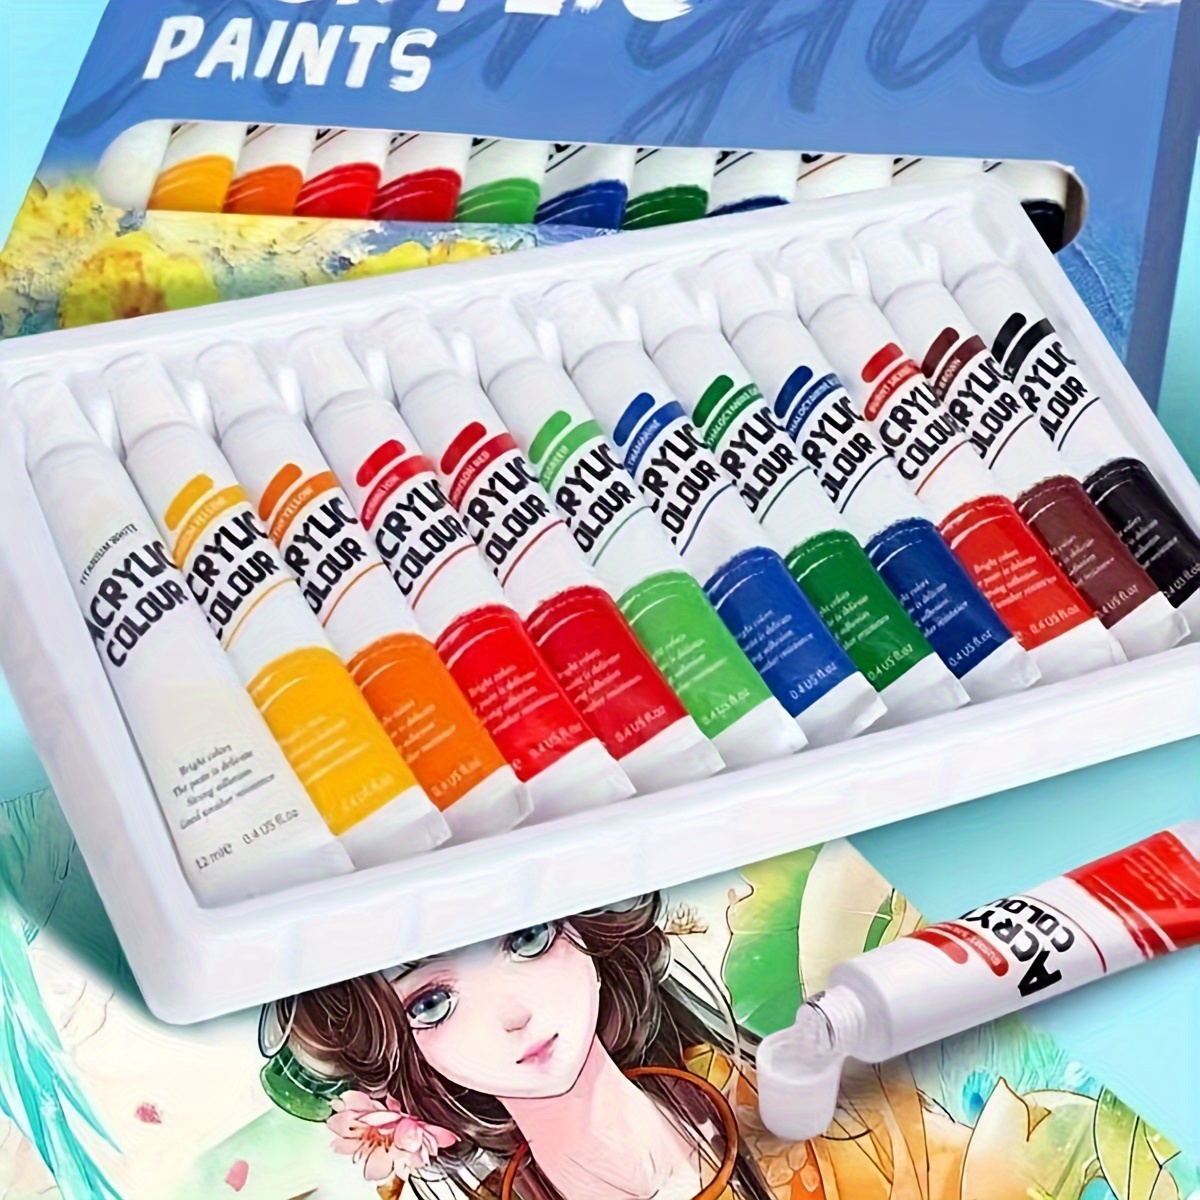 Professional Acrylic Painting Kit - 36 Piece Set